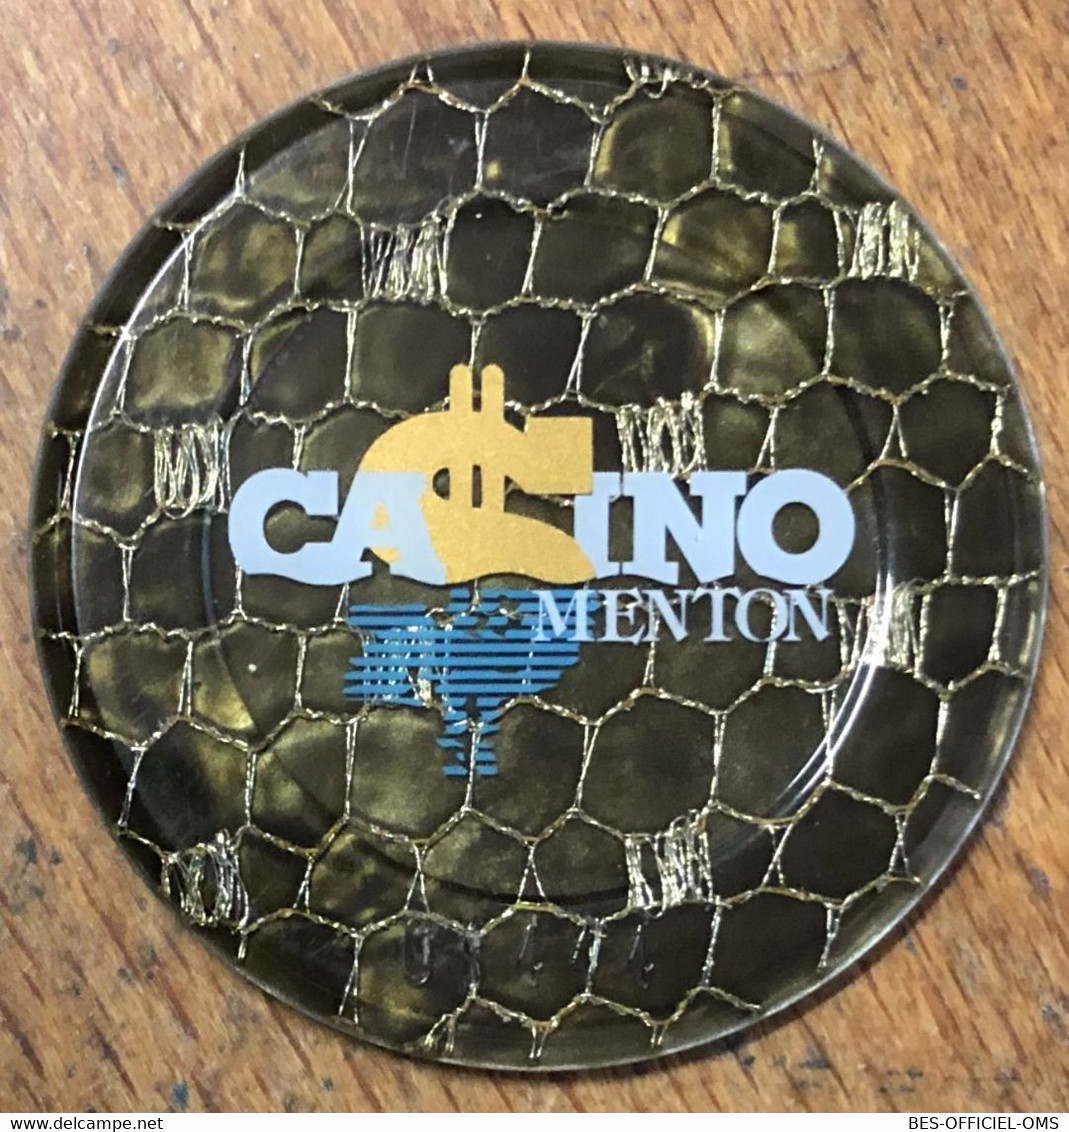 06 MENTON CASINO JETON DE 20 FRANCS N° 01444 CHIP COINS TOKENS GAMING - Casino